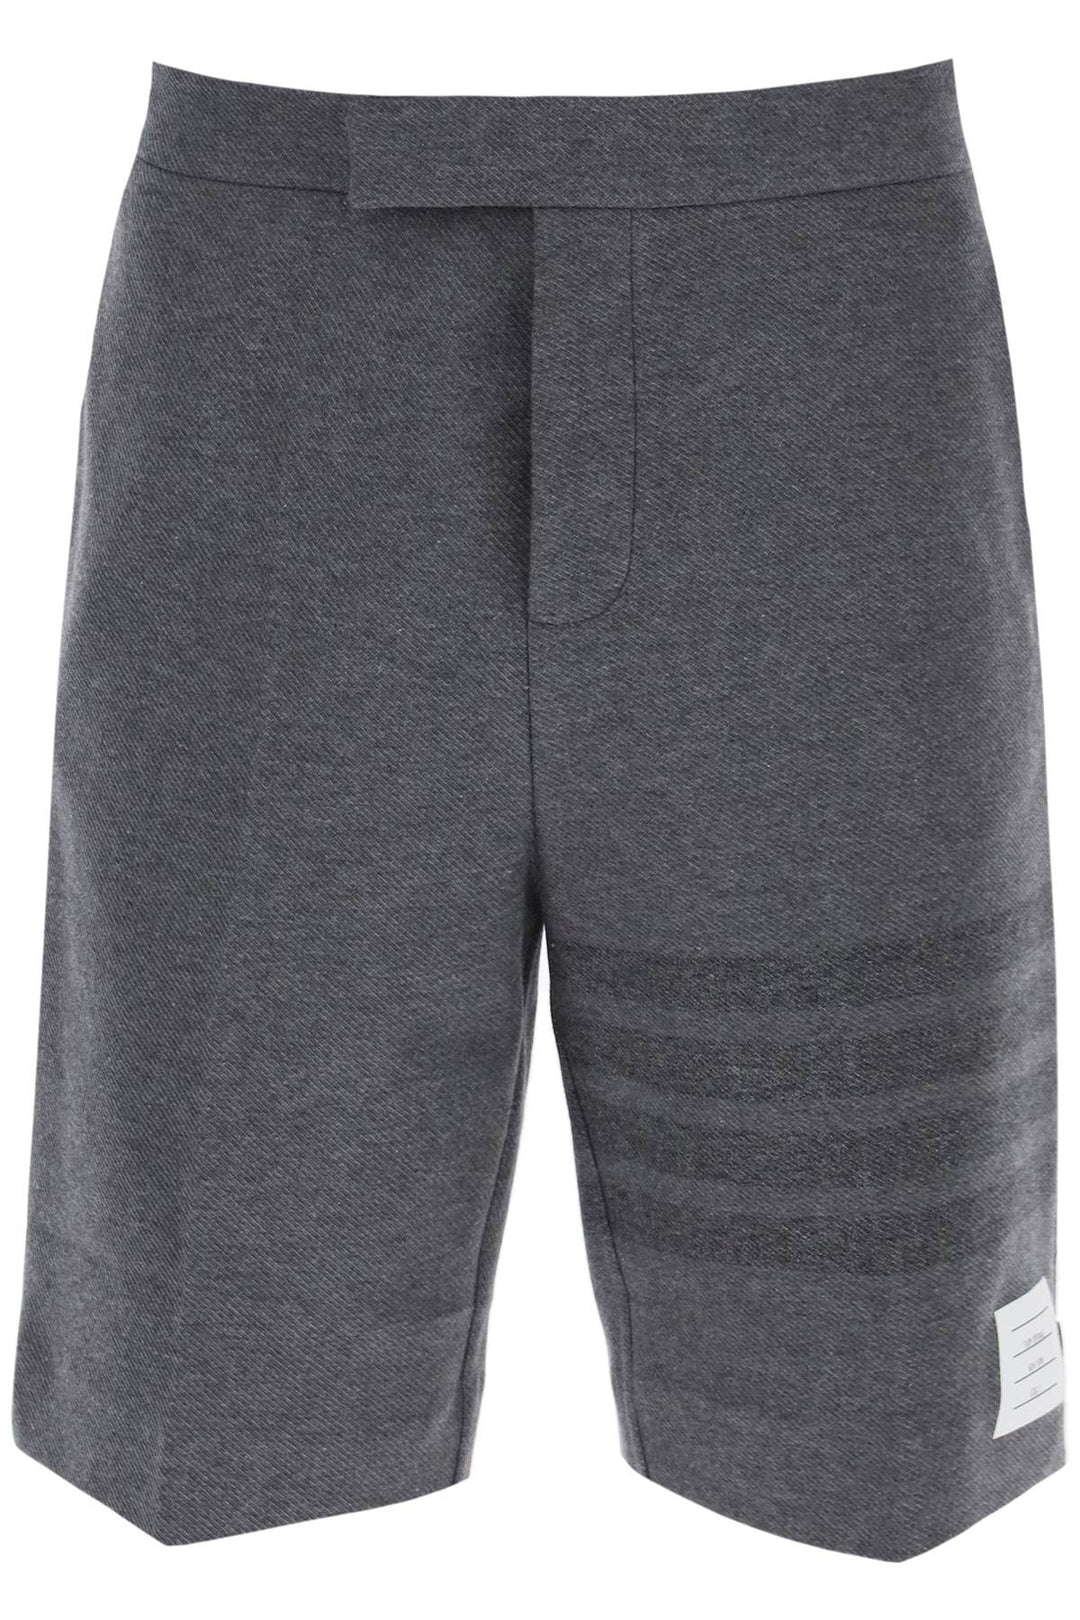 Thom browne shorts with 4-bar motif-0